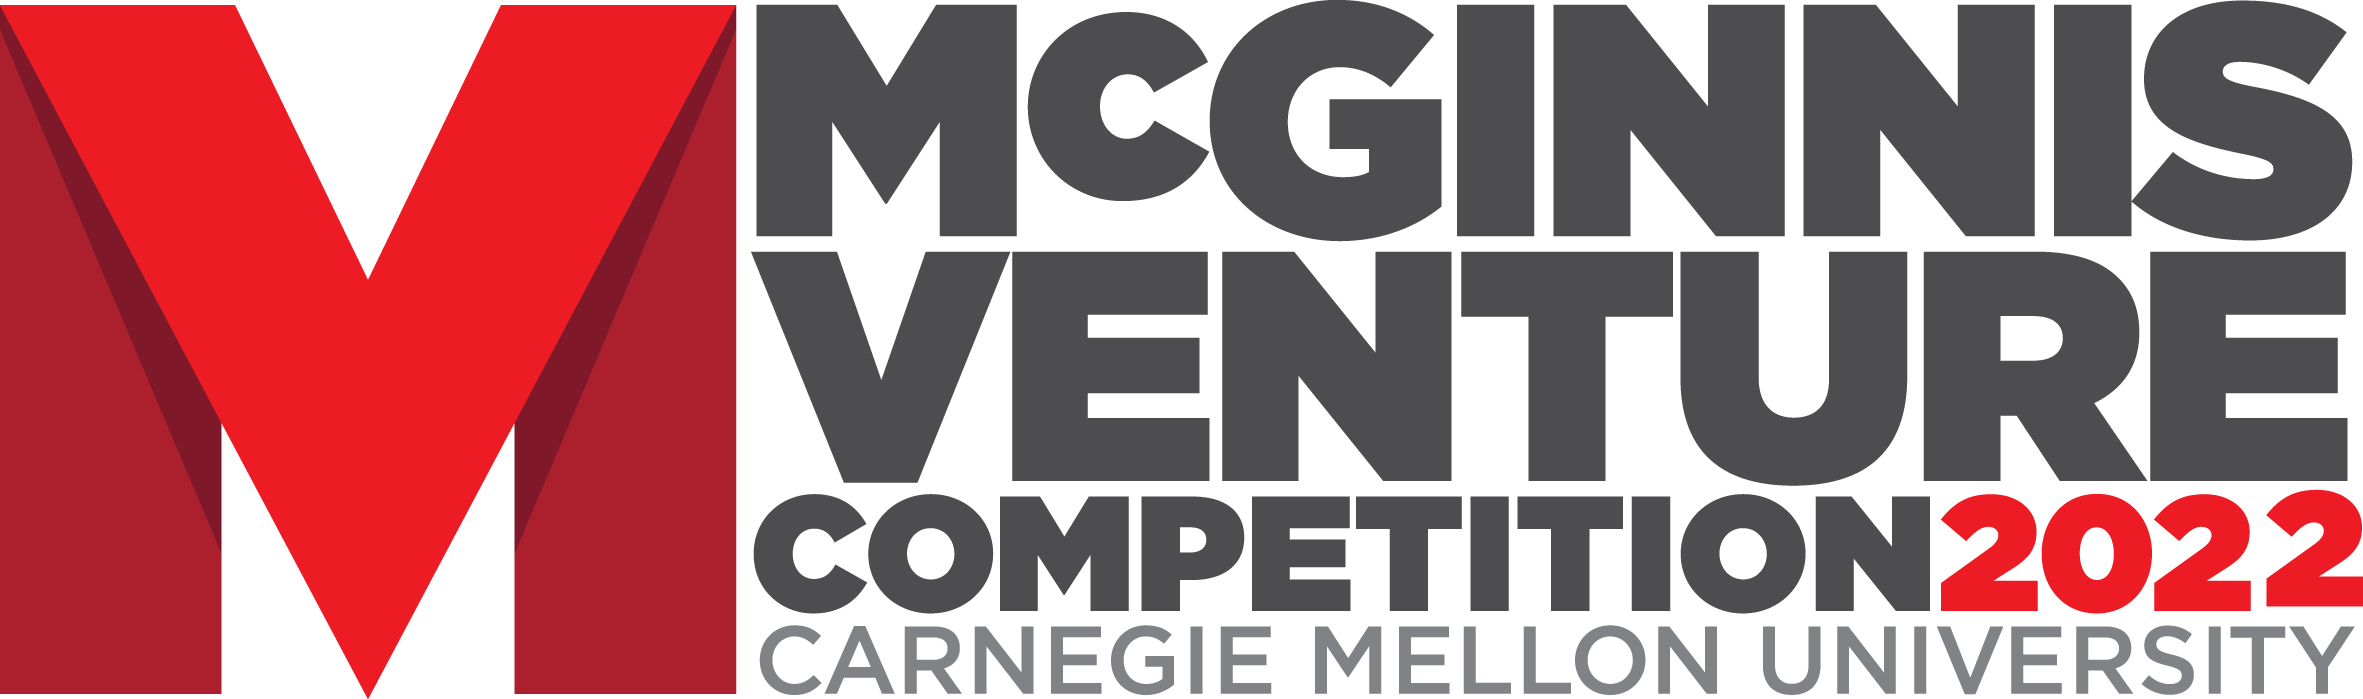 mcginnisventure-2022-logo_horiz1.png